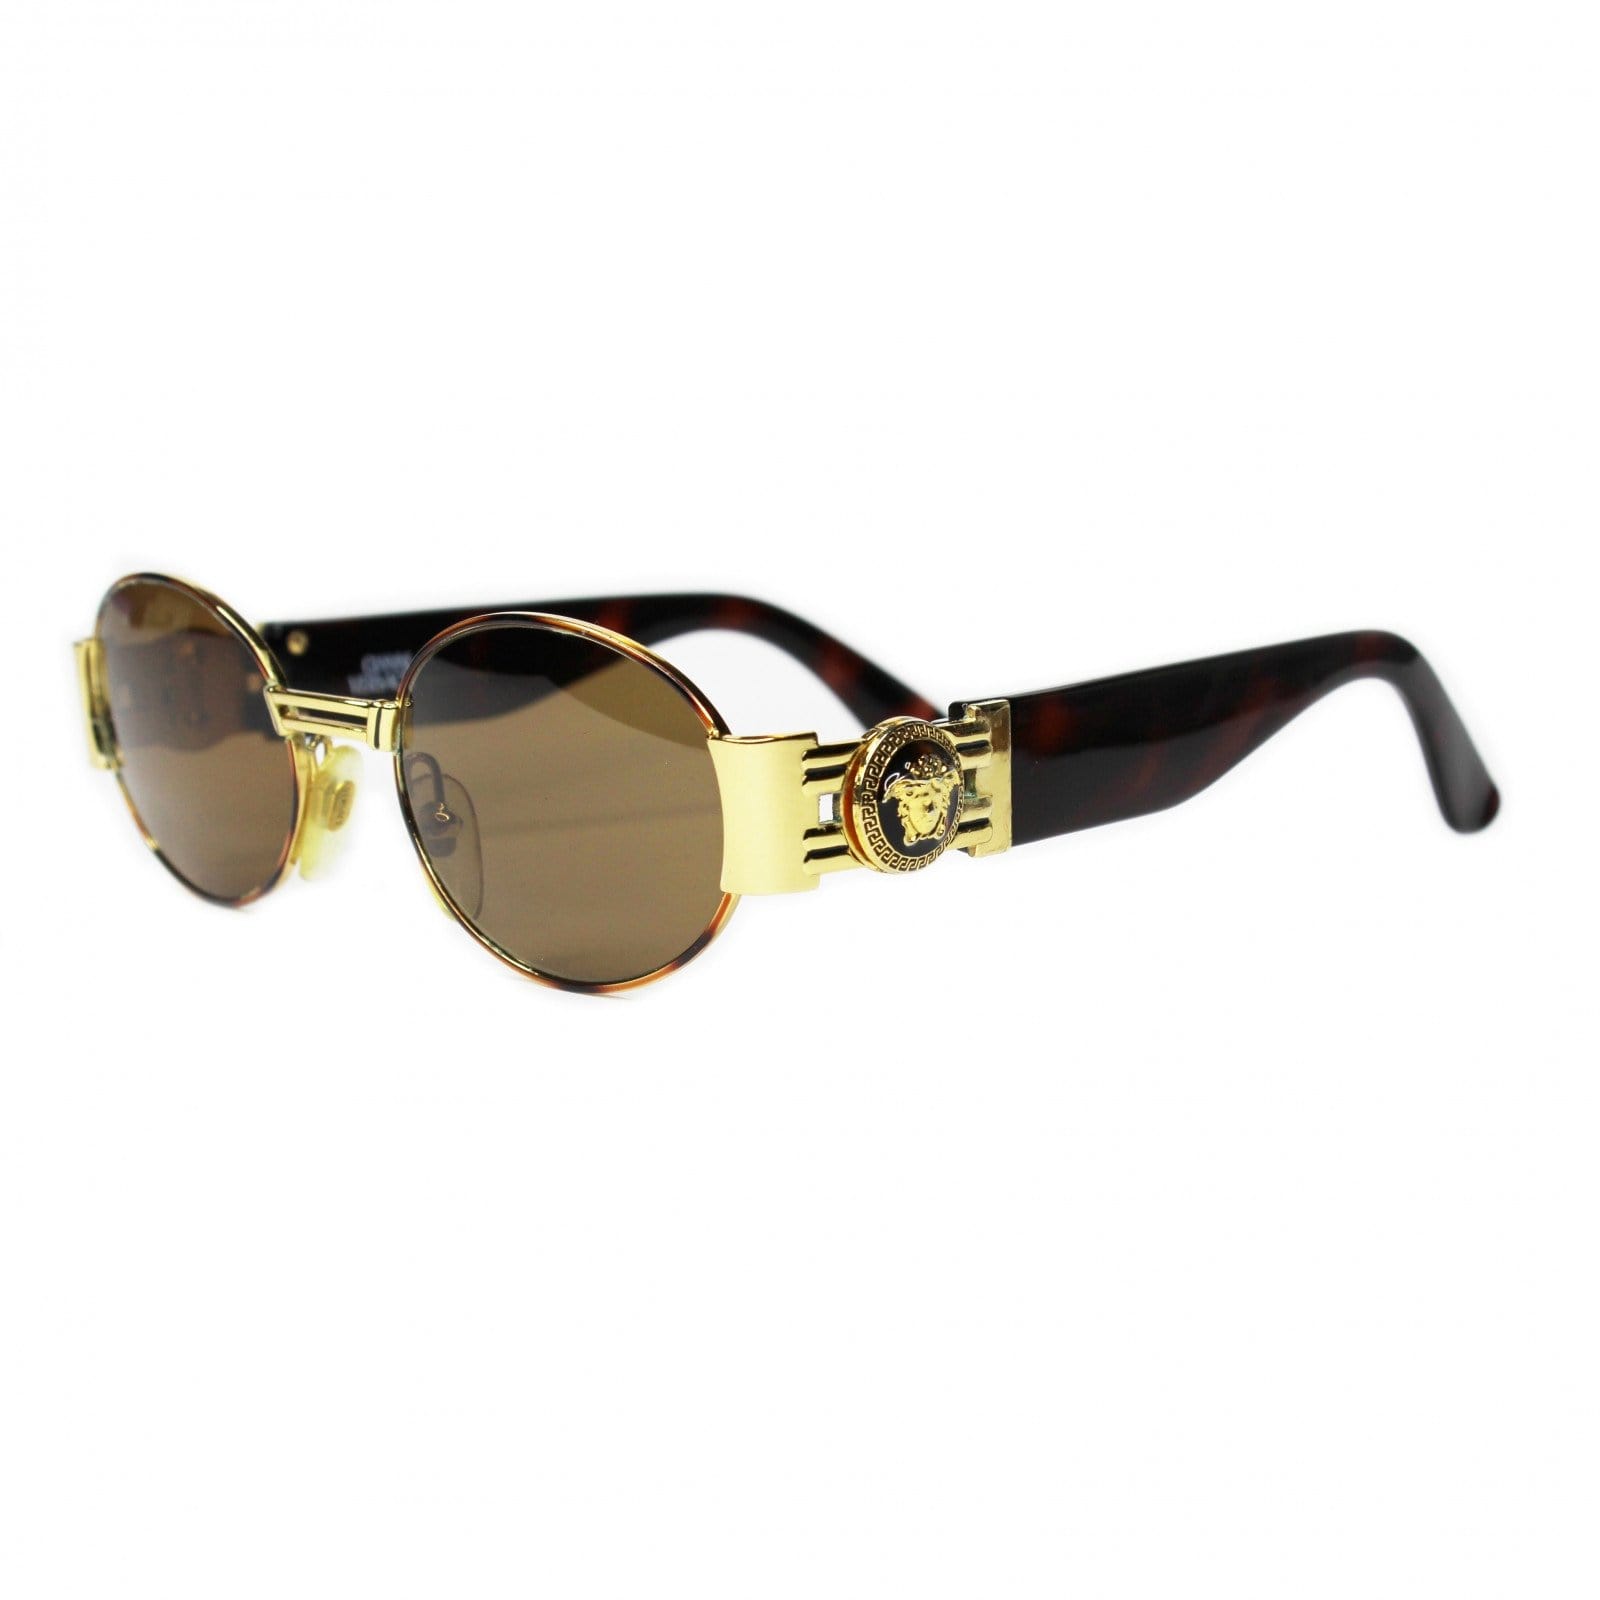 versace s71 sunglasses